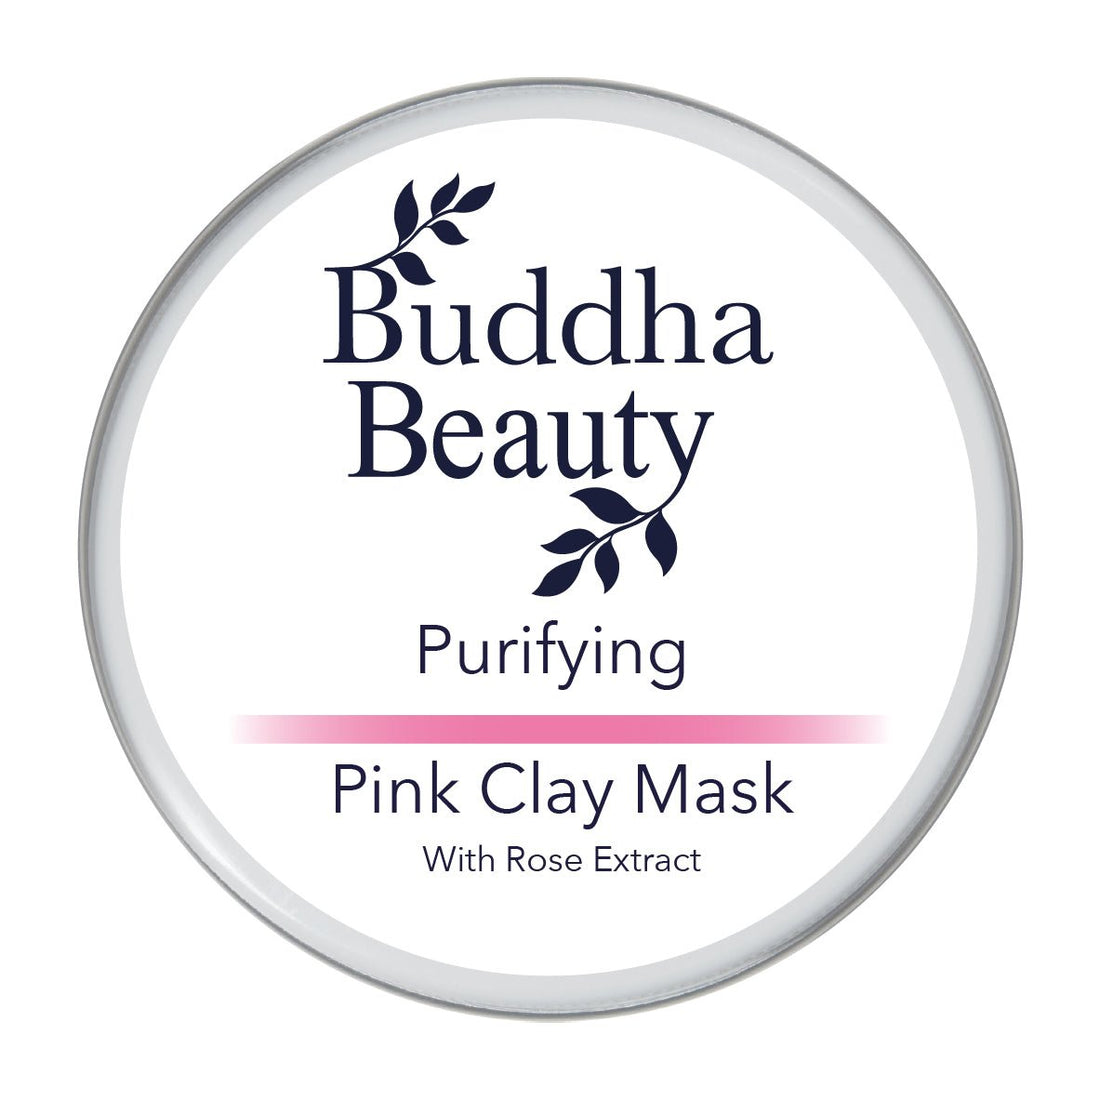 Should you use a Face Mask? - Buddha Beauty Skincare